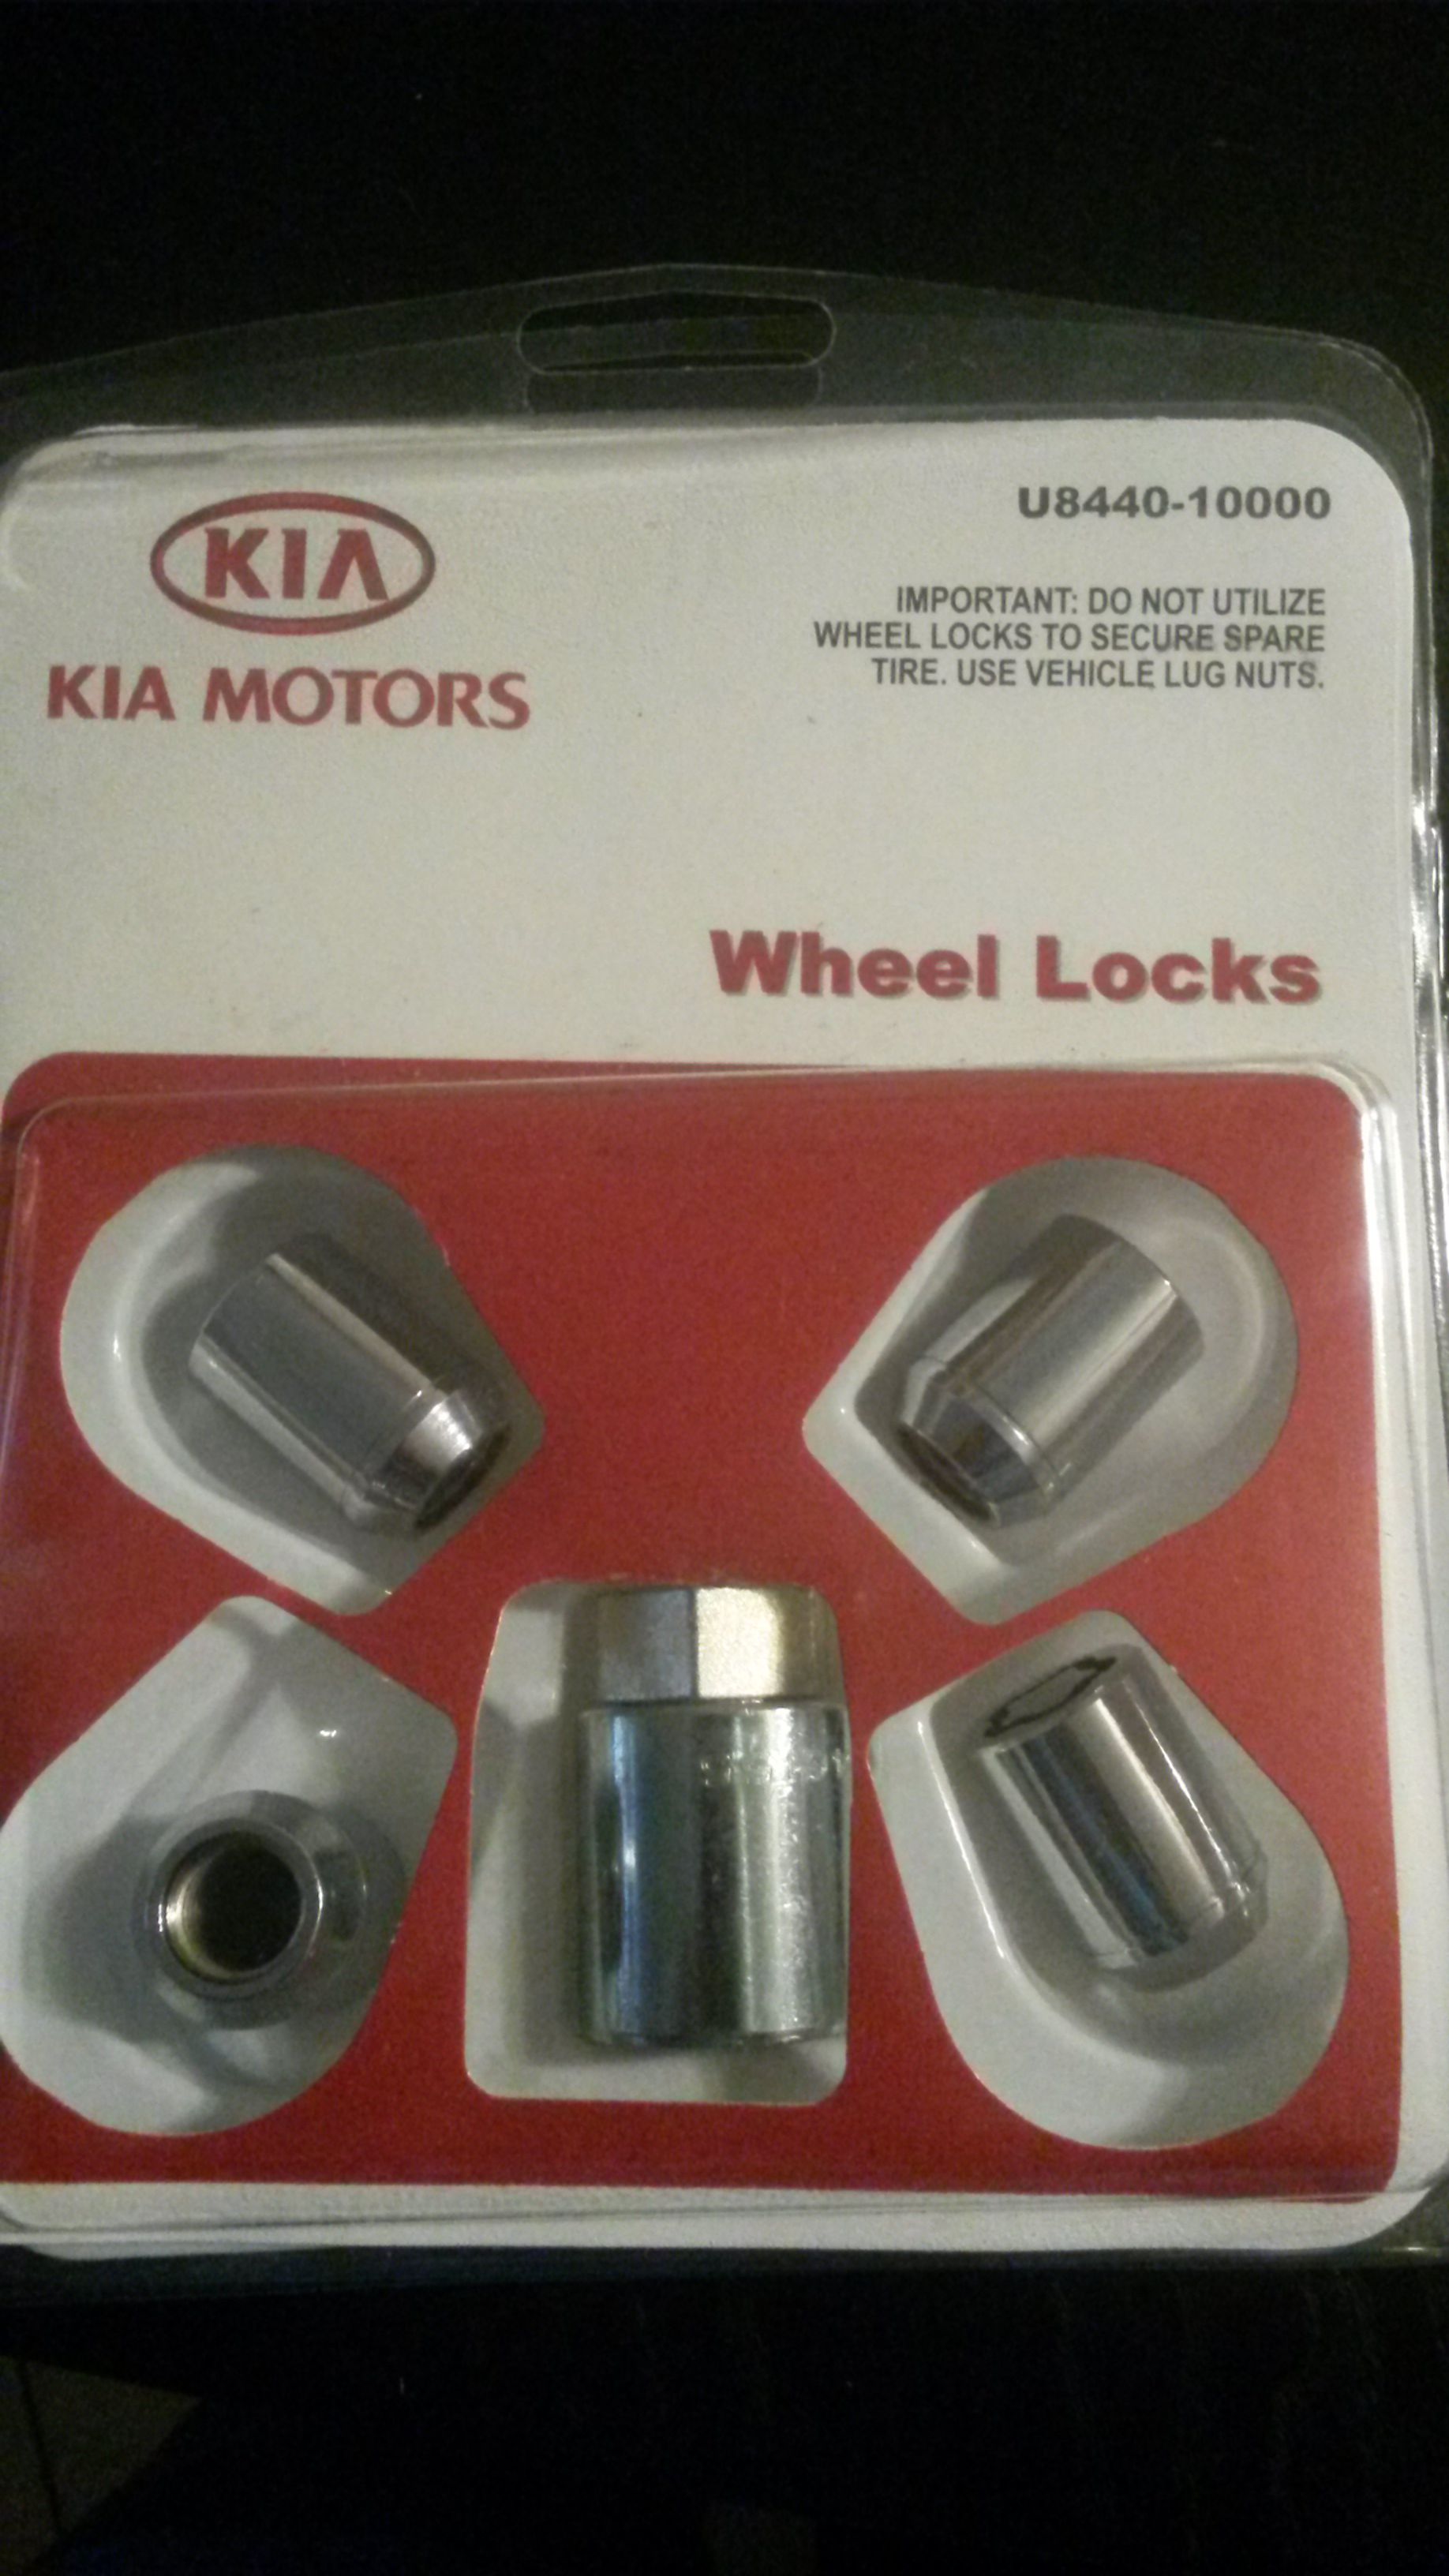 NEW Genuine Kia Accessories U8440-10000 Wheel Lock OE PARTS. Fits: 2010-2013 Kia Forte, Forte 5-door, Koup; 2010-2013 Sedona; 2010-2013 Soul